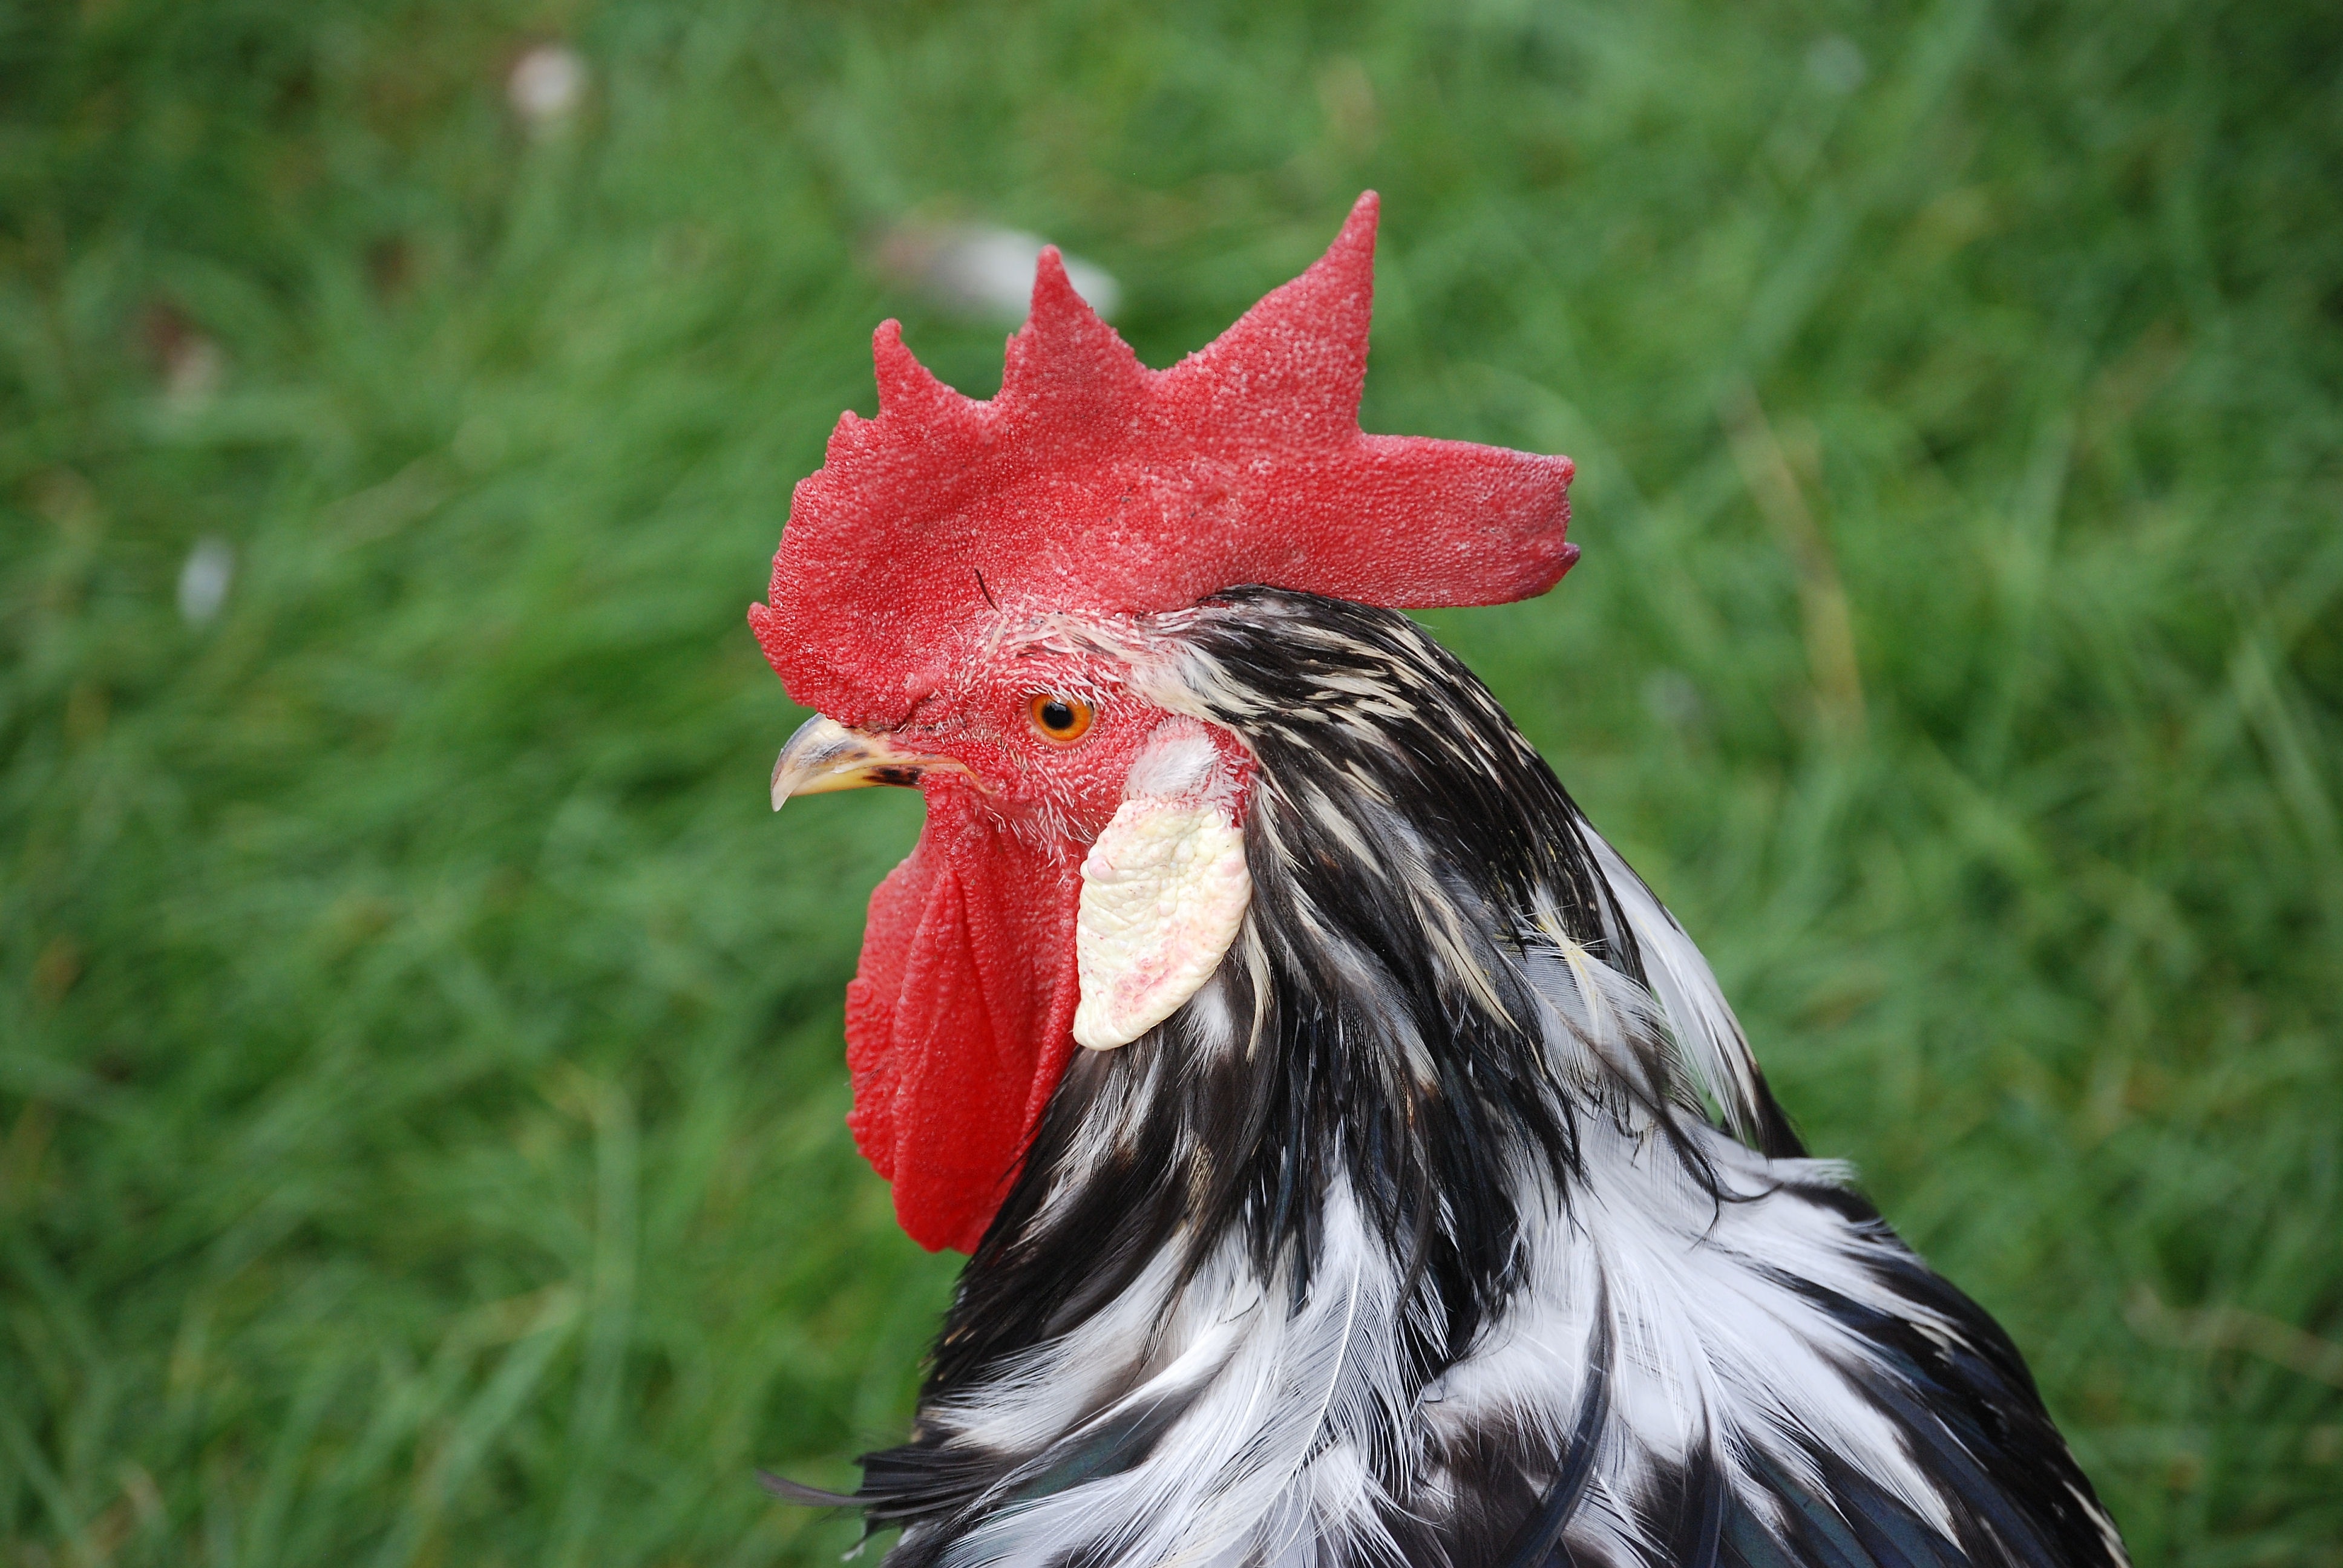 Chicken, Poultry, Cockerel, Rooster, chicken - bird, rooster